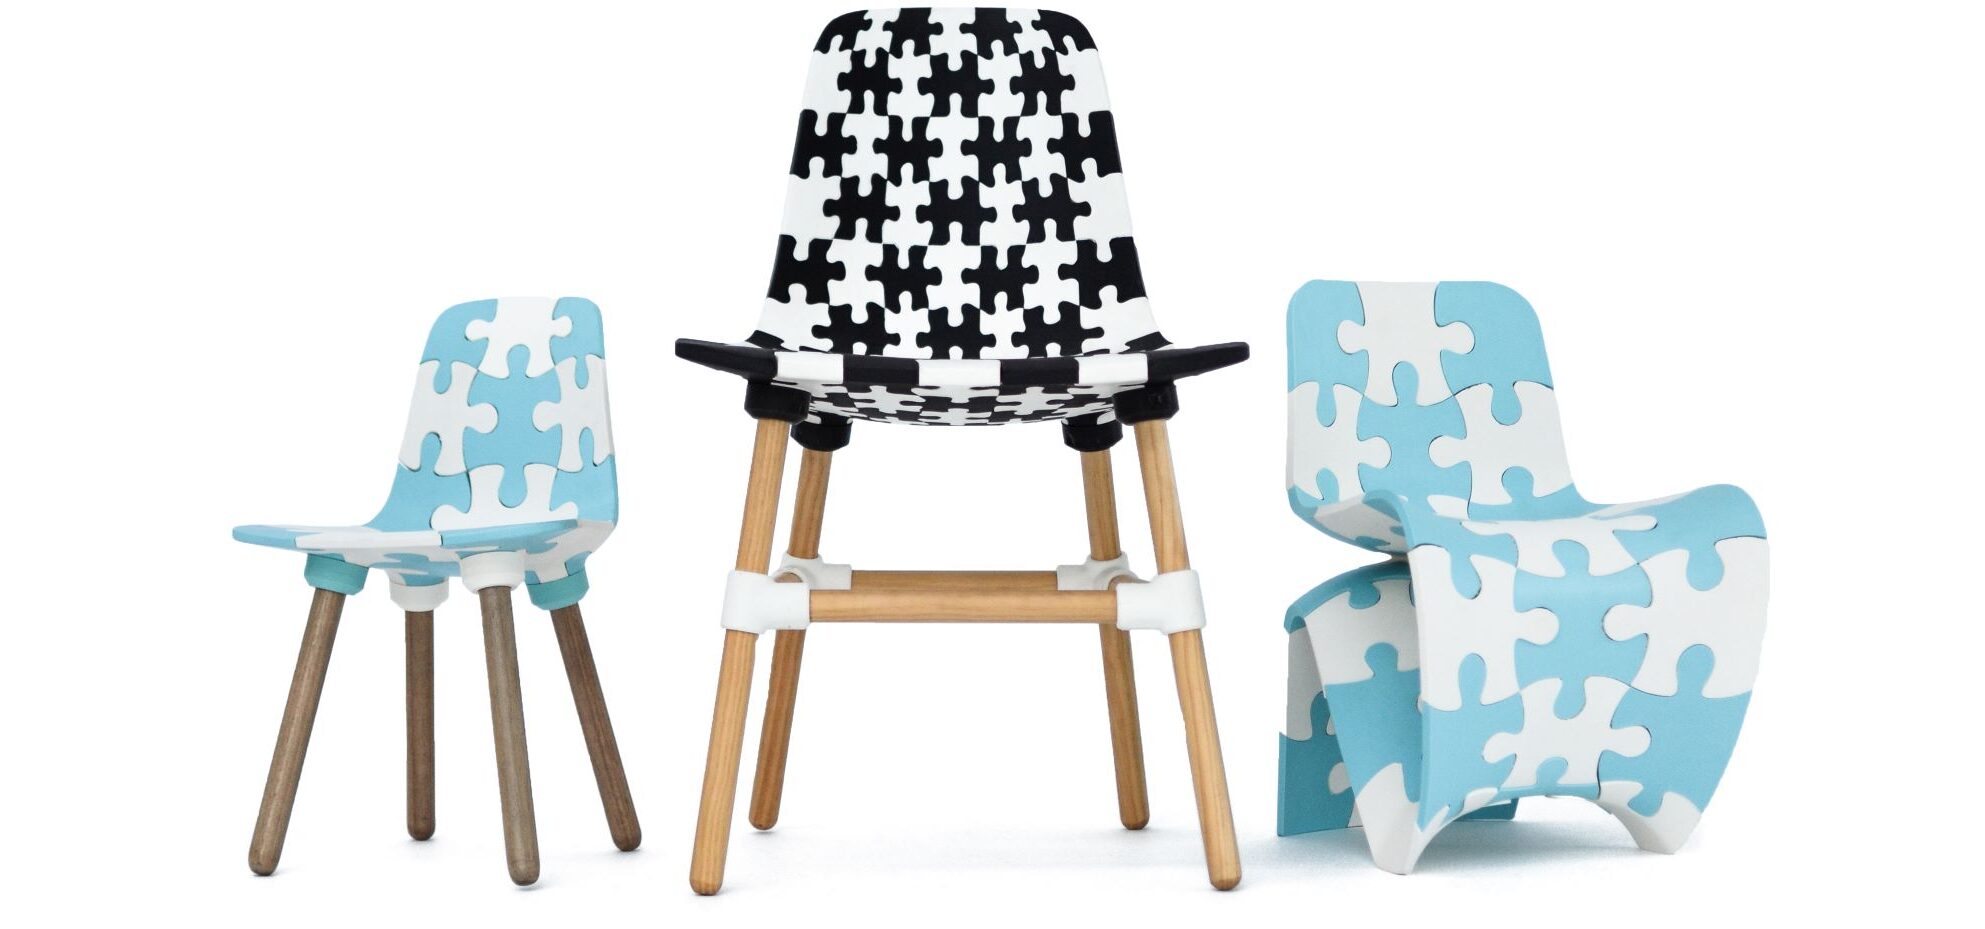 Joris Laarman: Maker Chairs